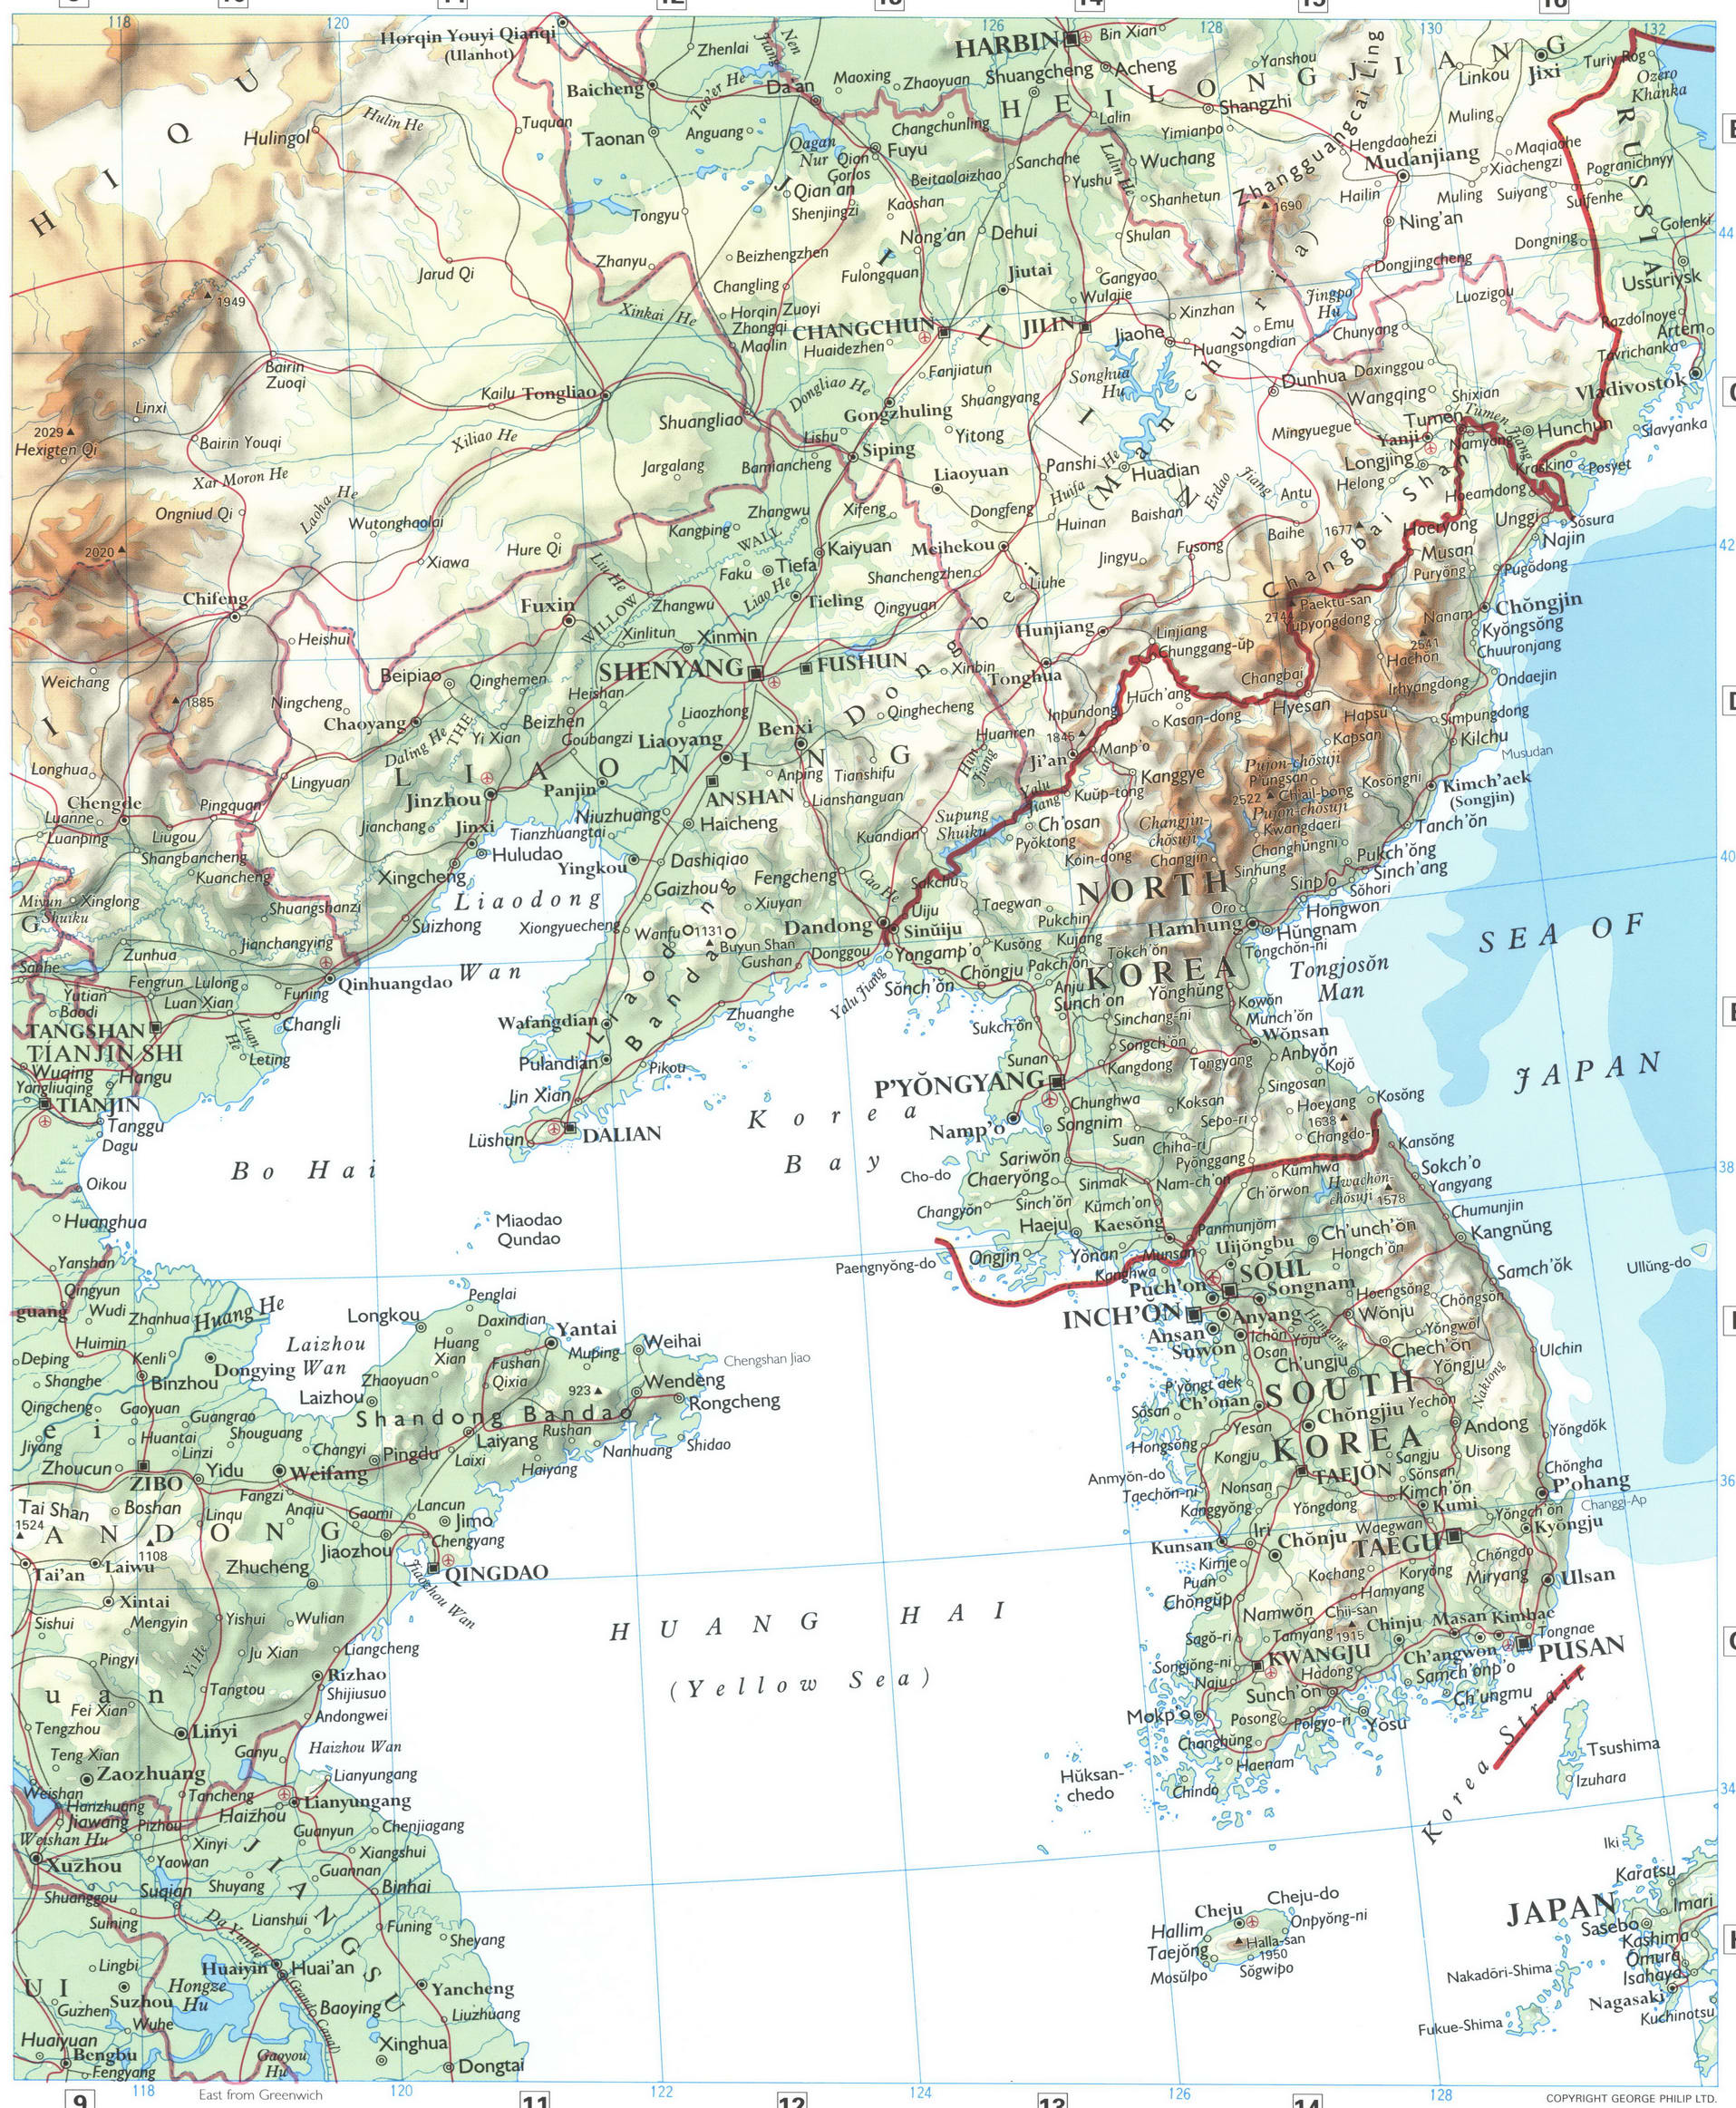 Korea and Northern China physical map